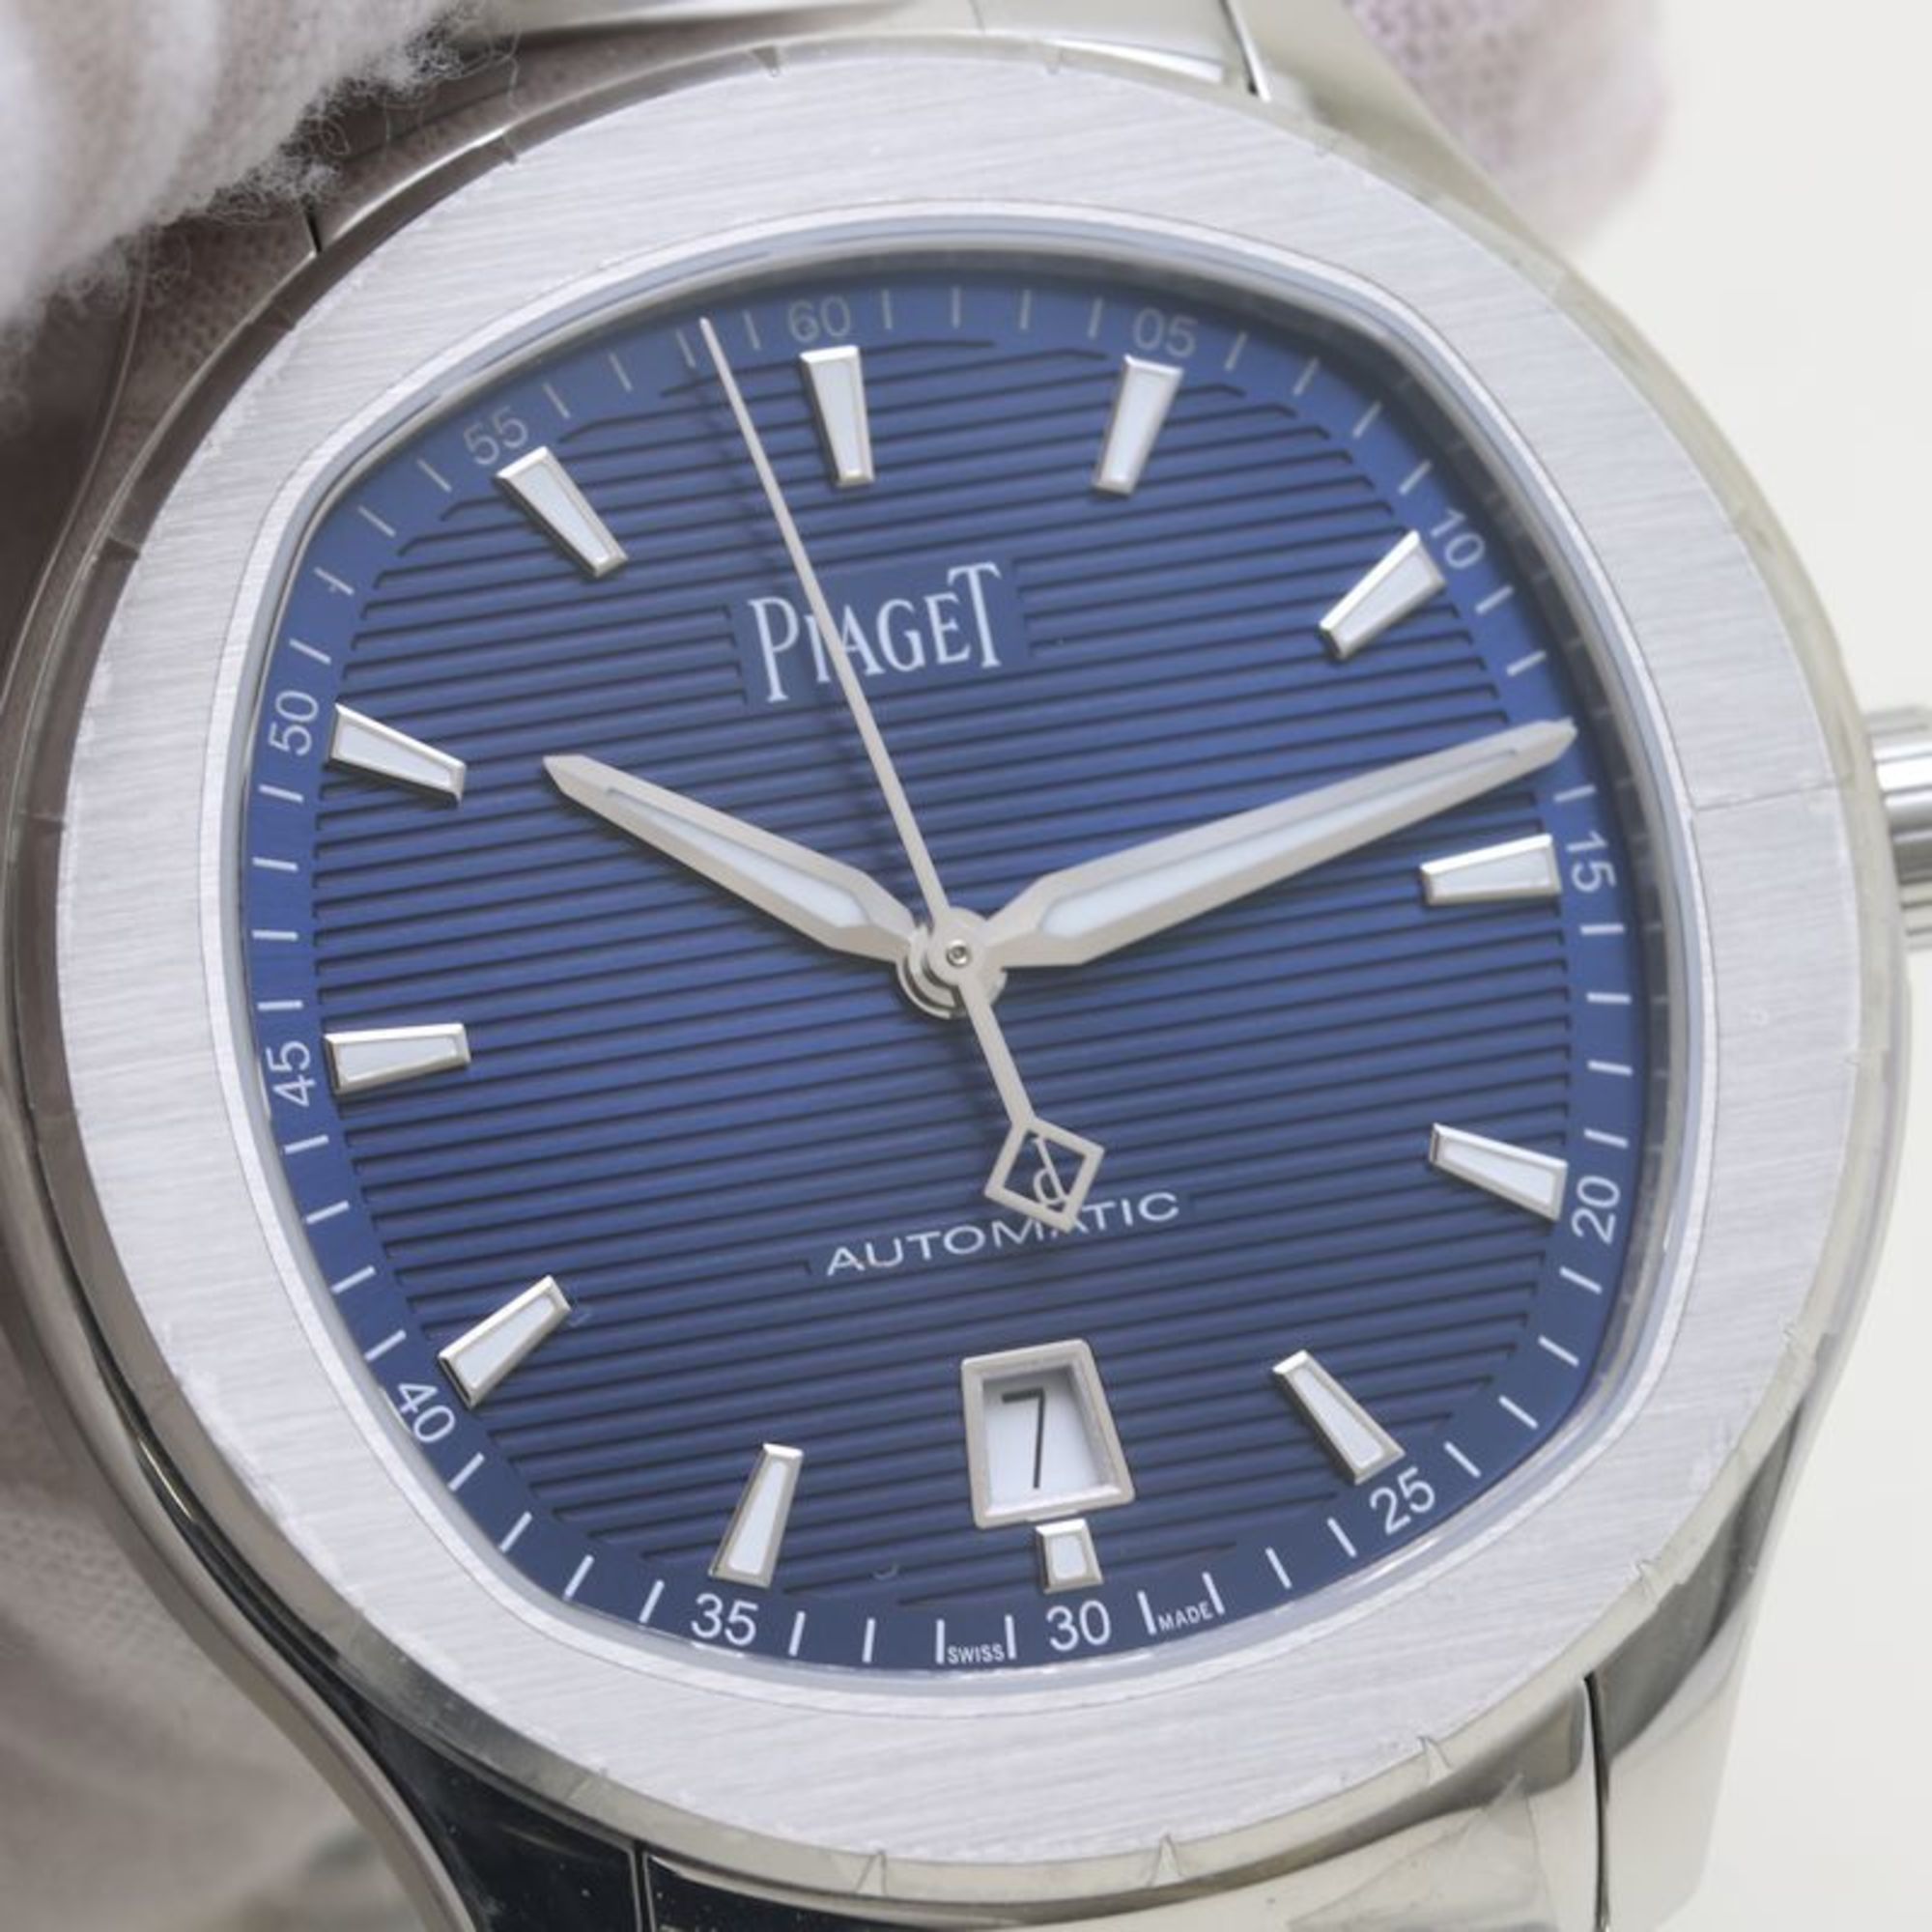 PIAGET Piaget Polo S Date Watch G01002 Men's 39350